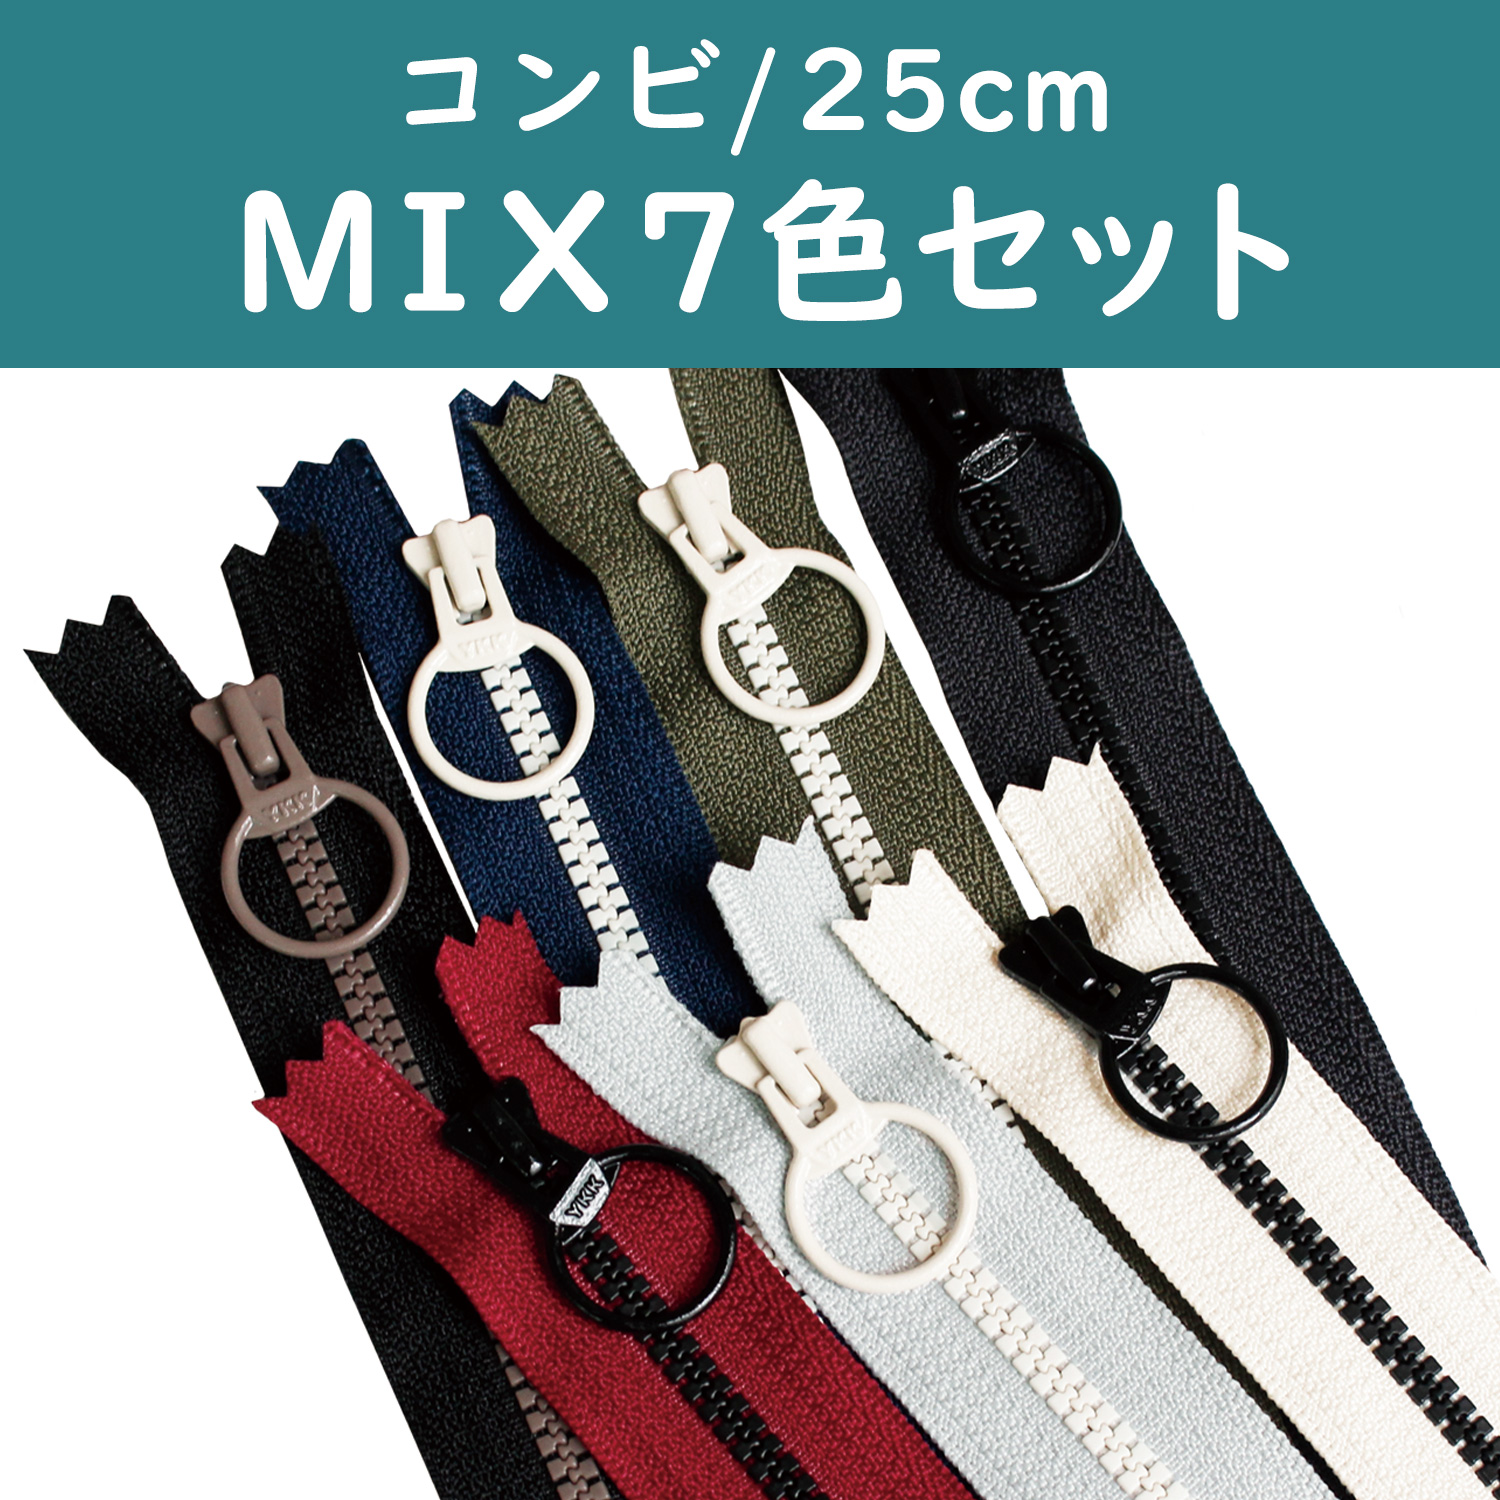 3VSC25-7MIX コンビファスナー 25cm 7色MIXセット (袋)